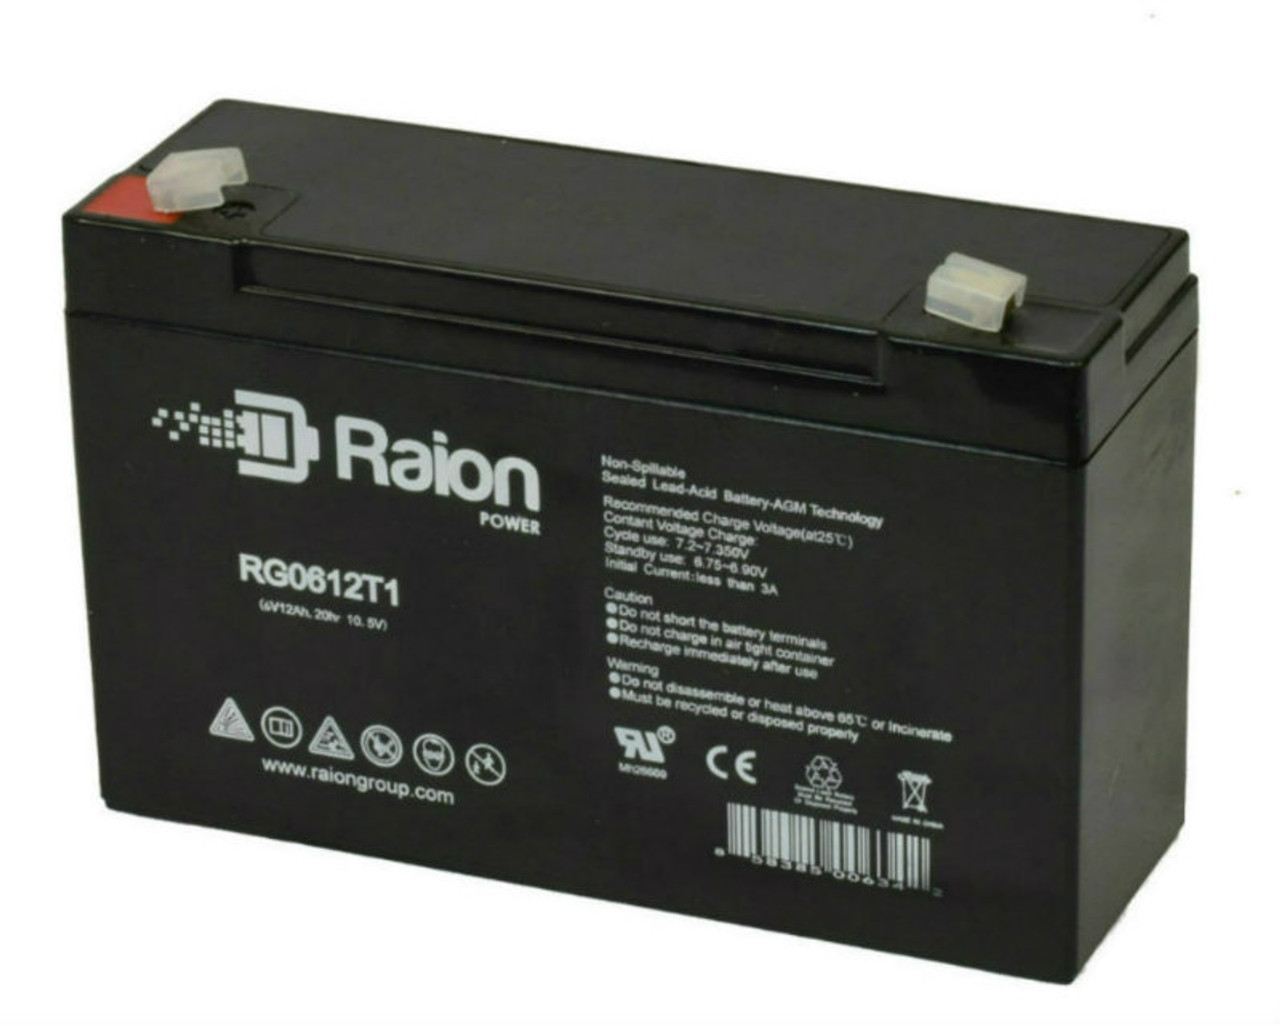 Raion Power RG06120T1 Replacement Emergency Light Battery for Sonnenschein Q103